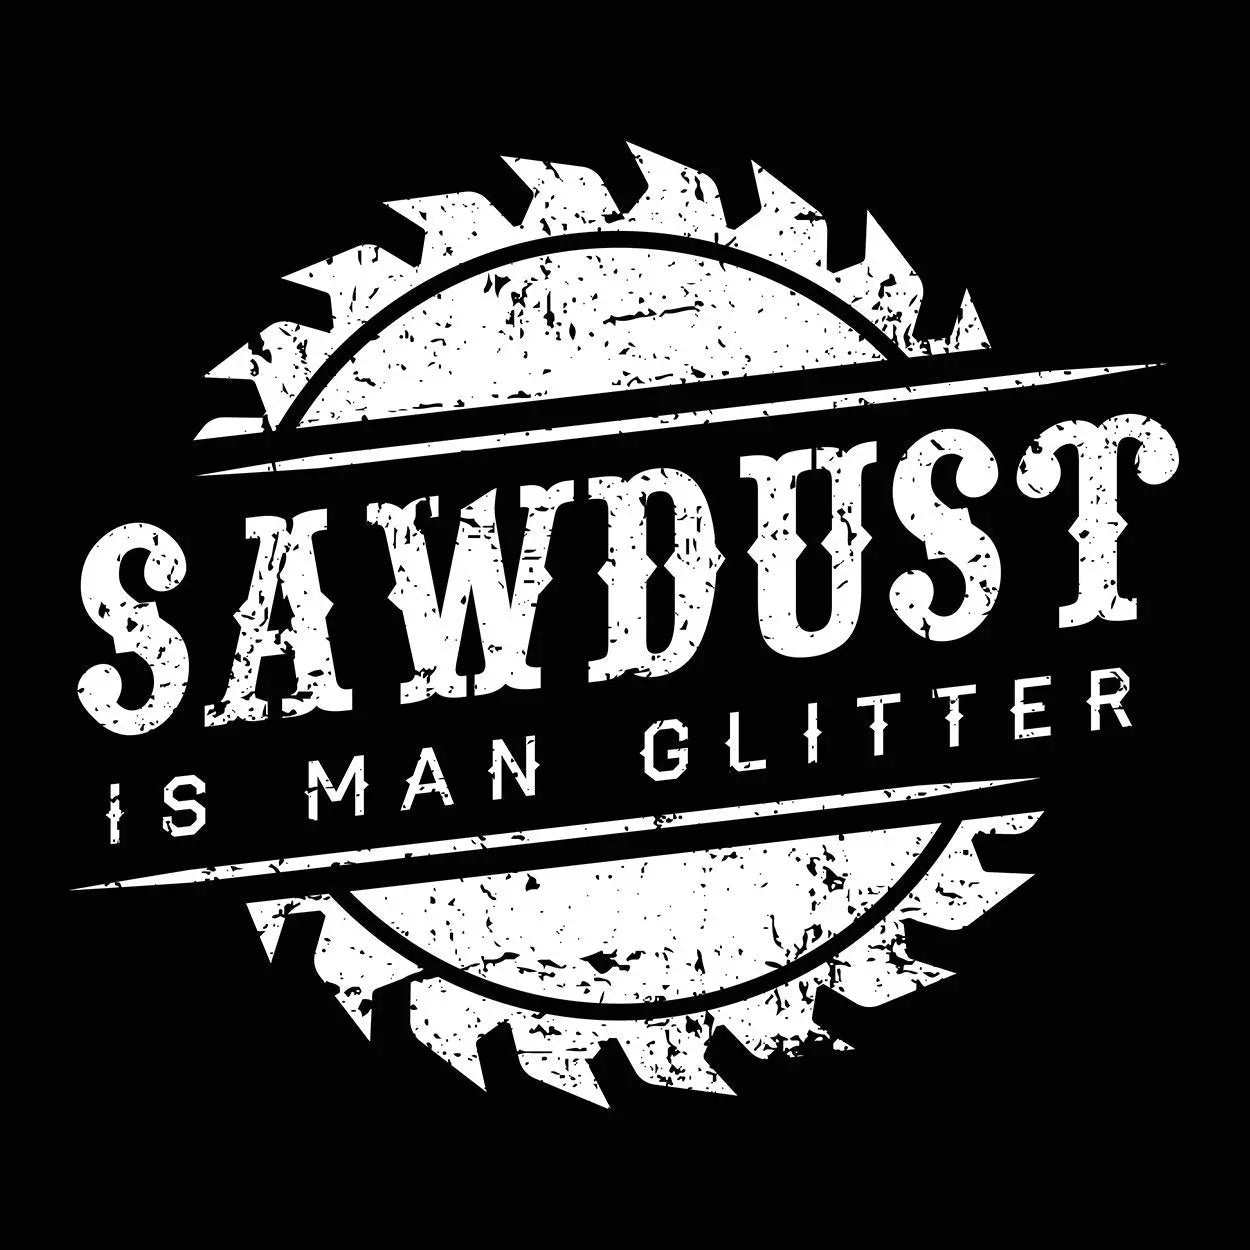 Sawdust Is Man Glitter Tshirt - Donkey Tees